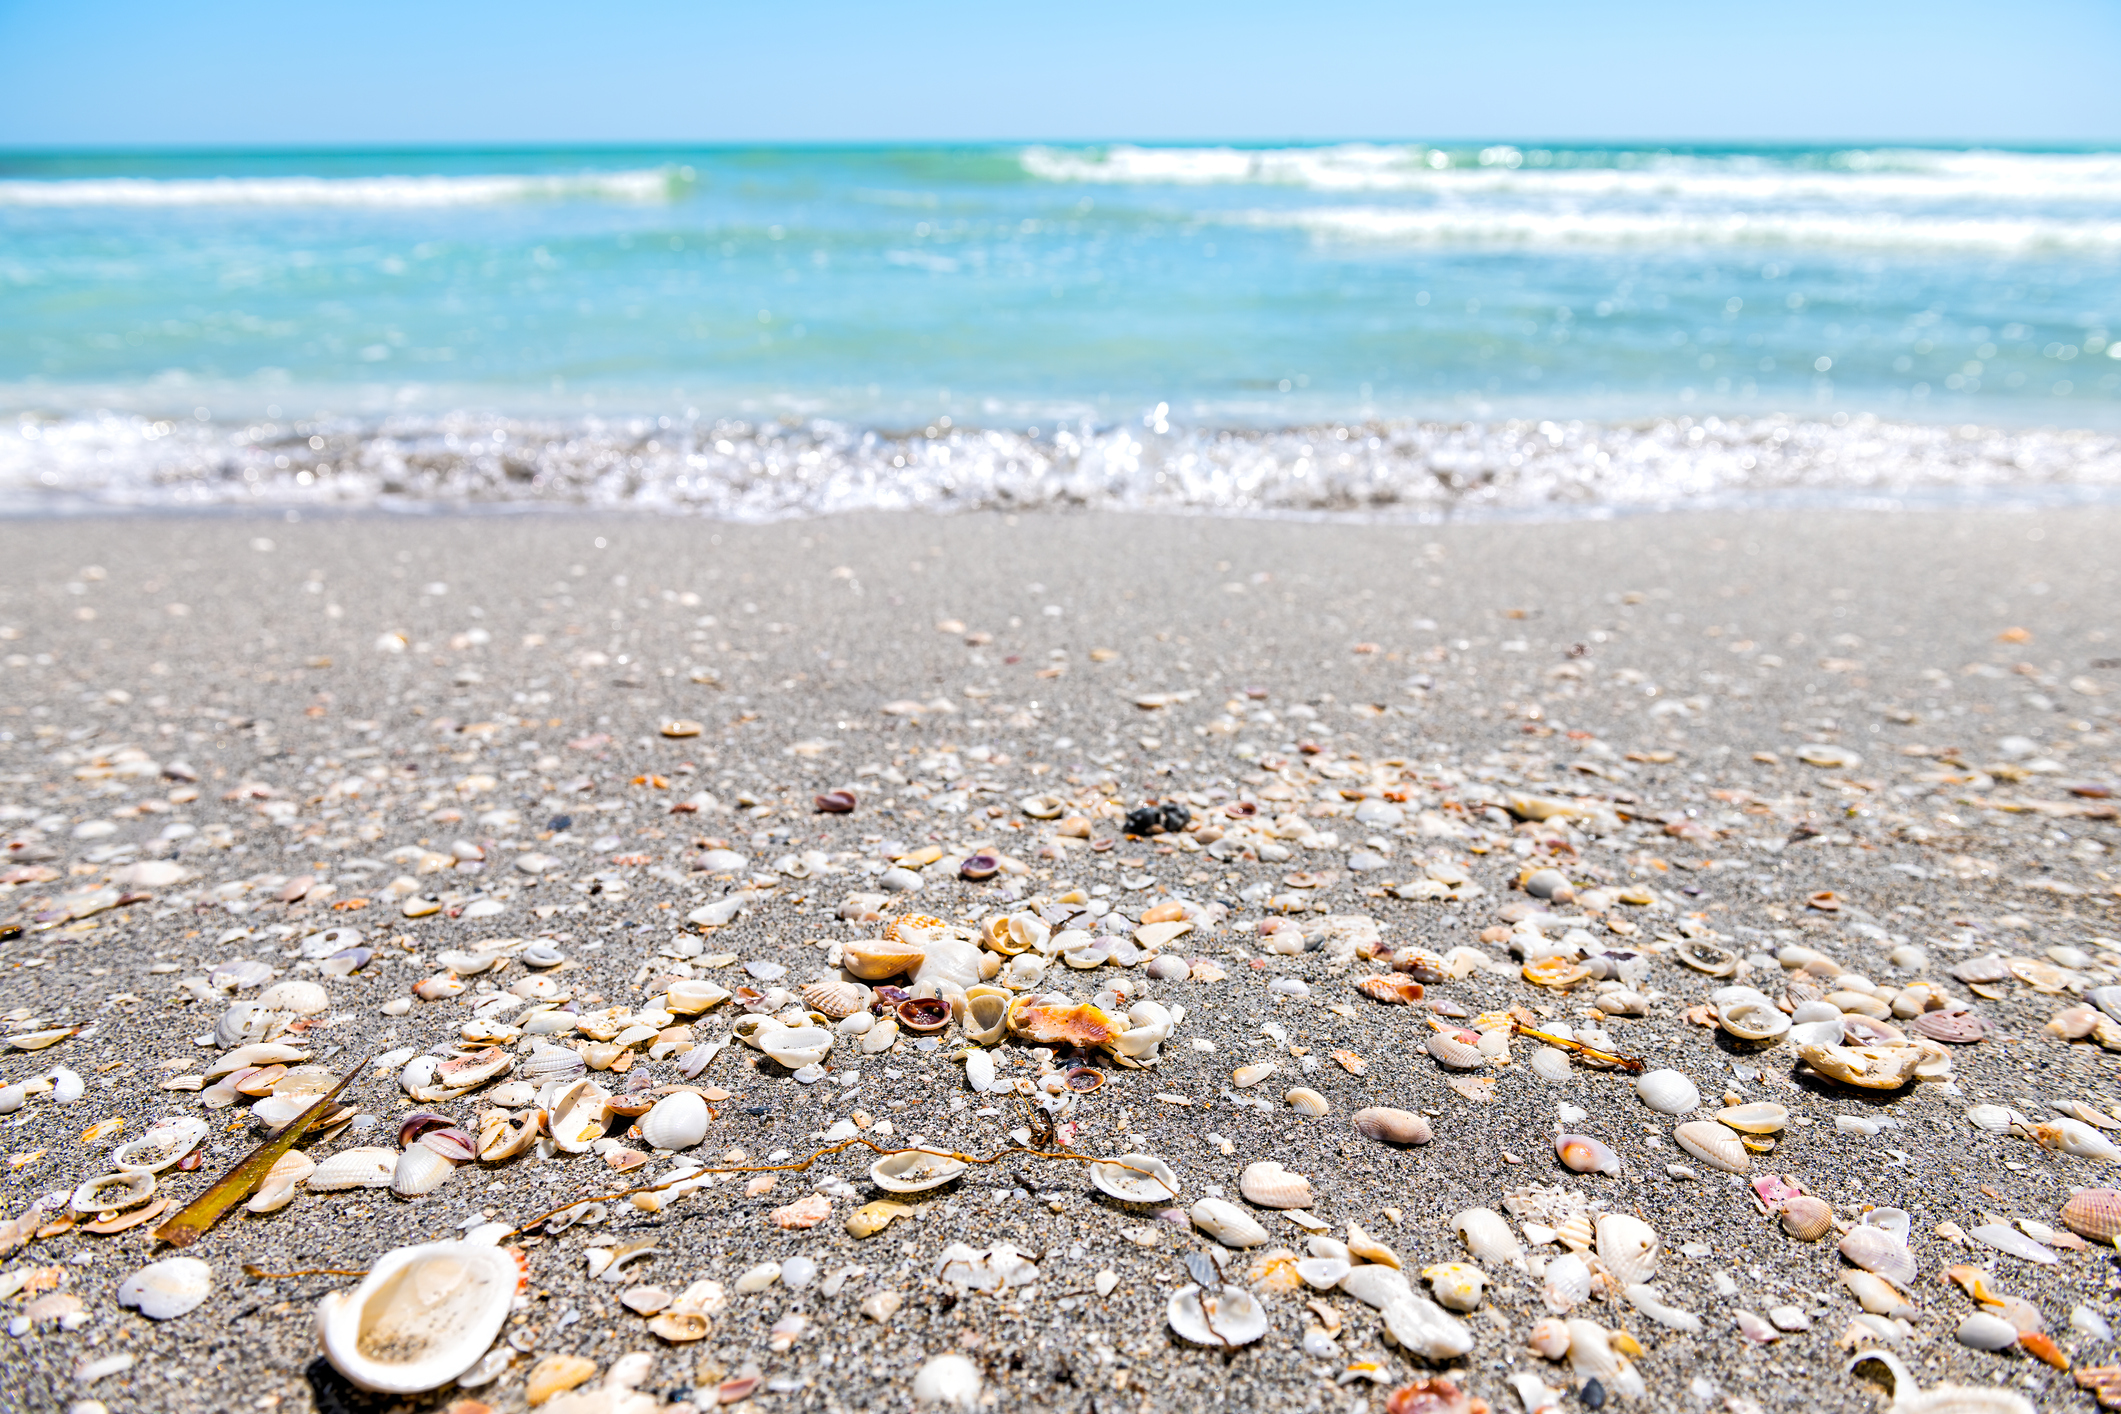 Seashells scattered along the coastline.